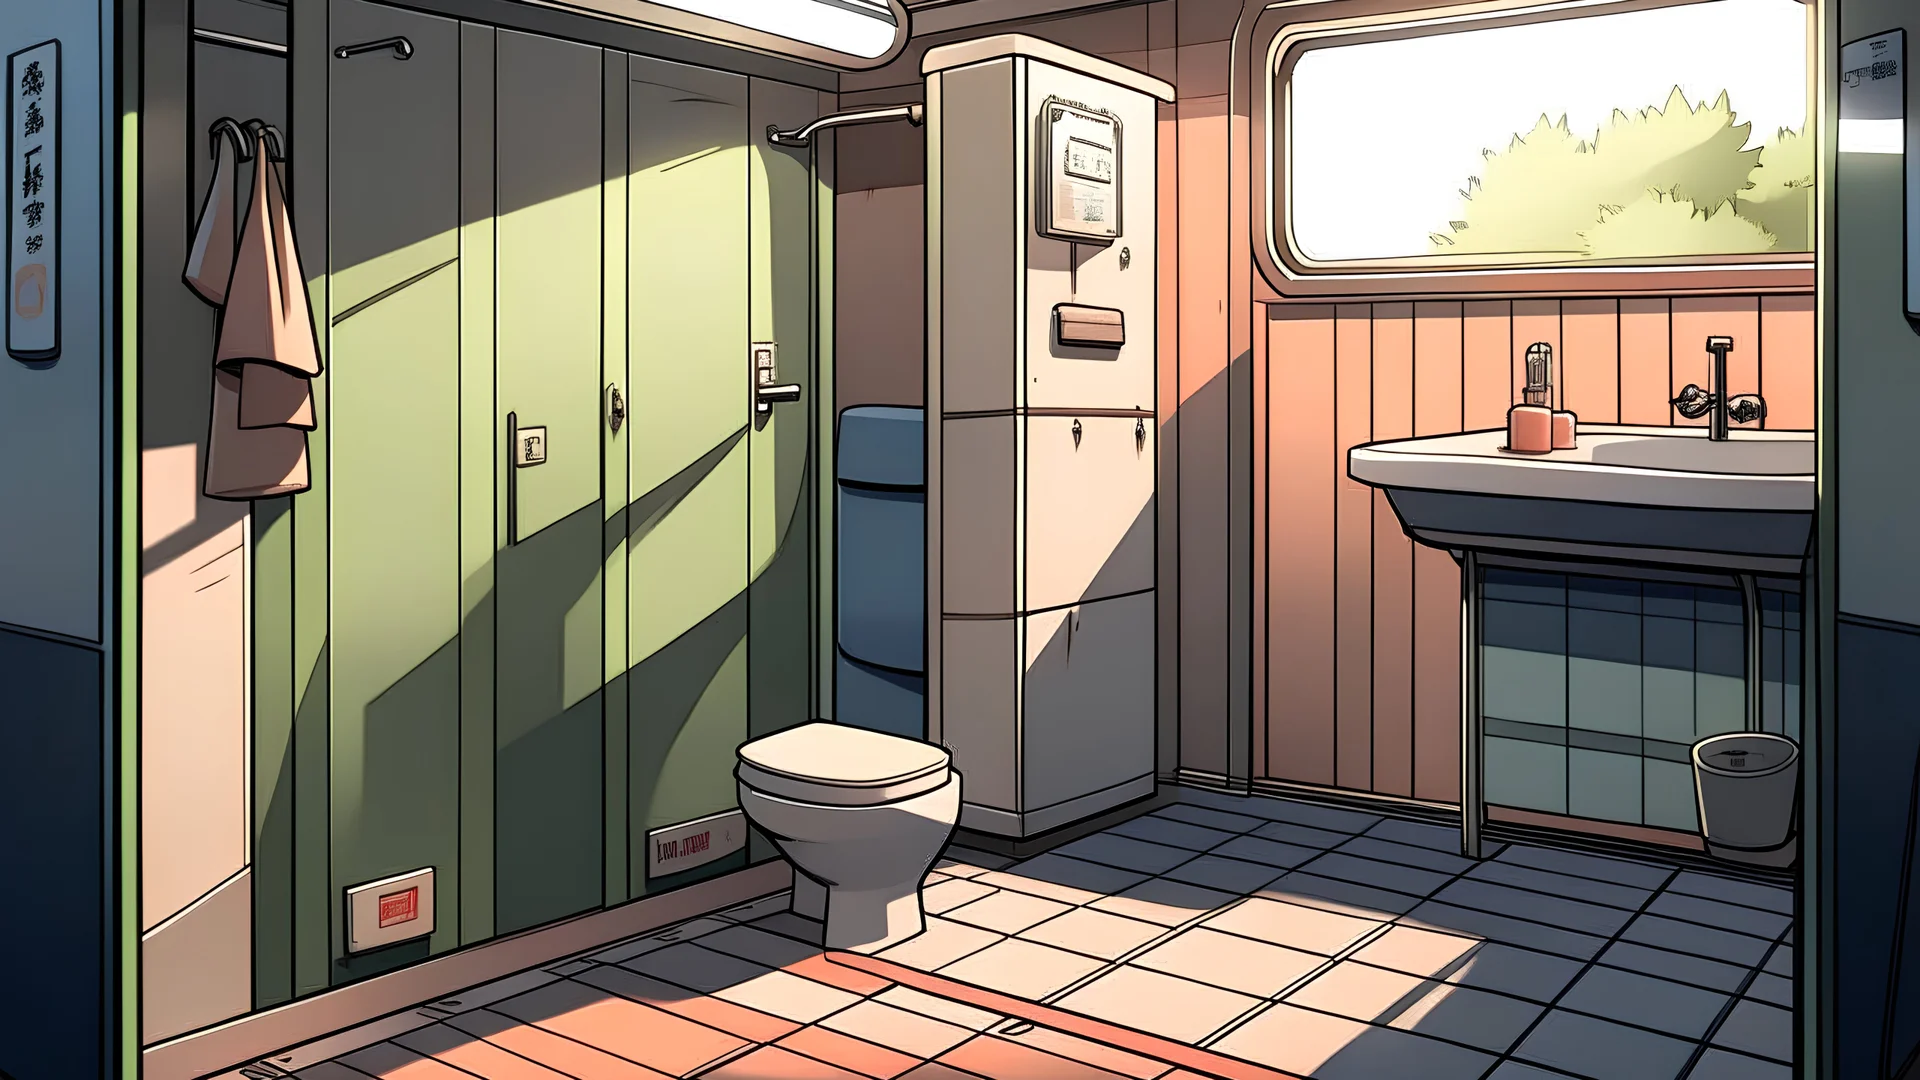 toilet cabin, anime style